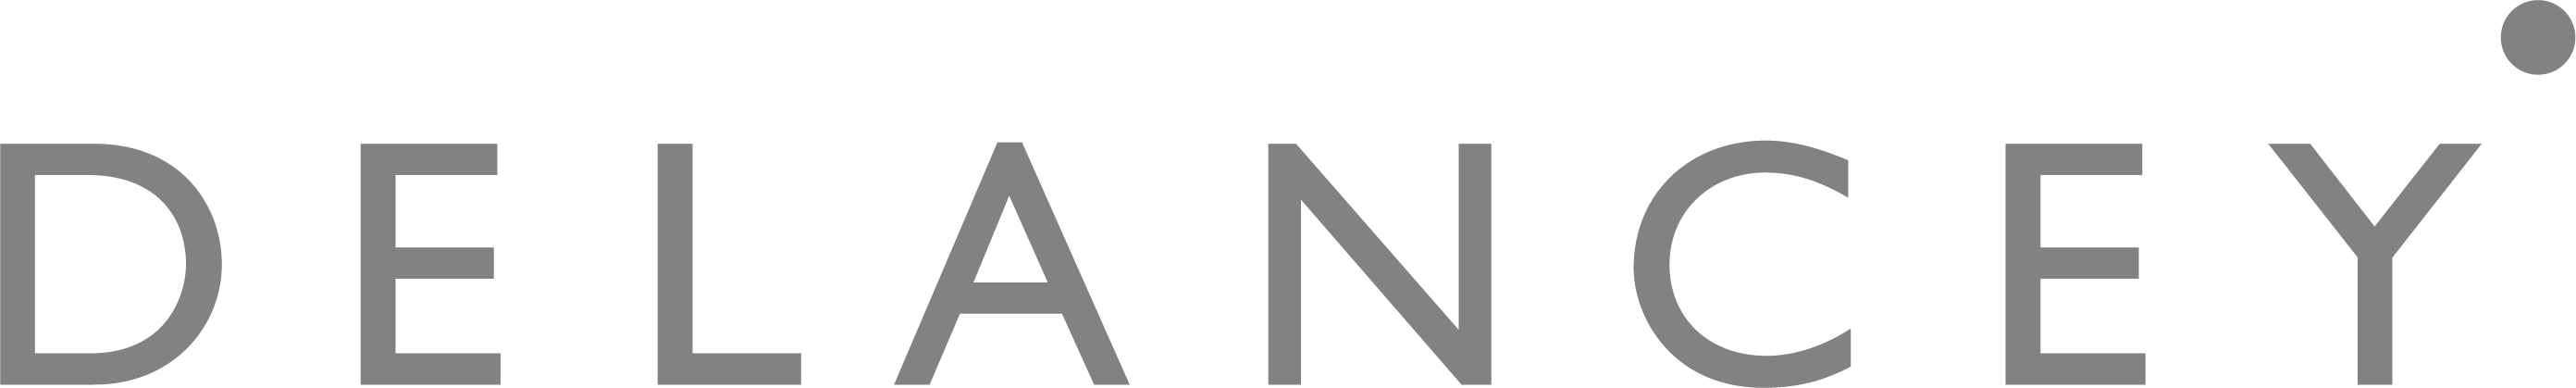 2022 Delancey logo